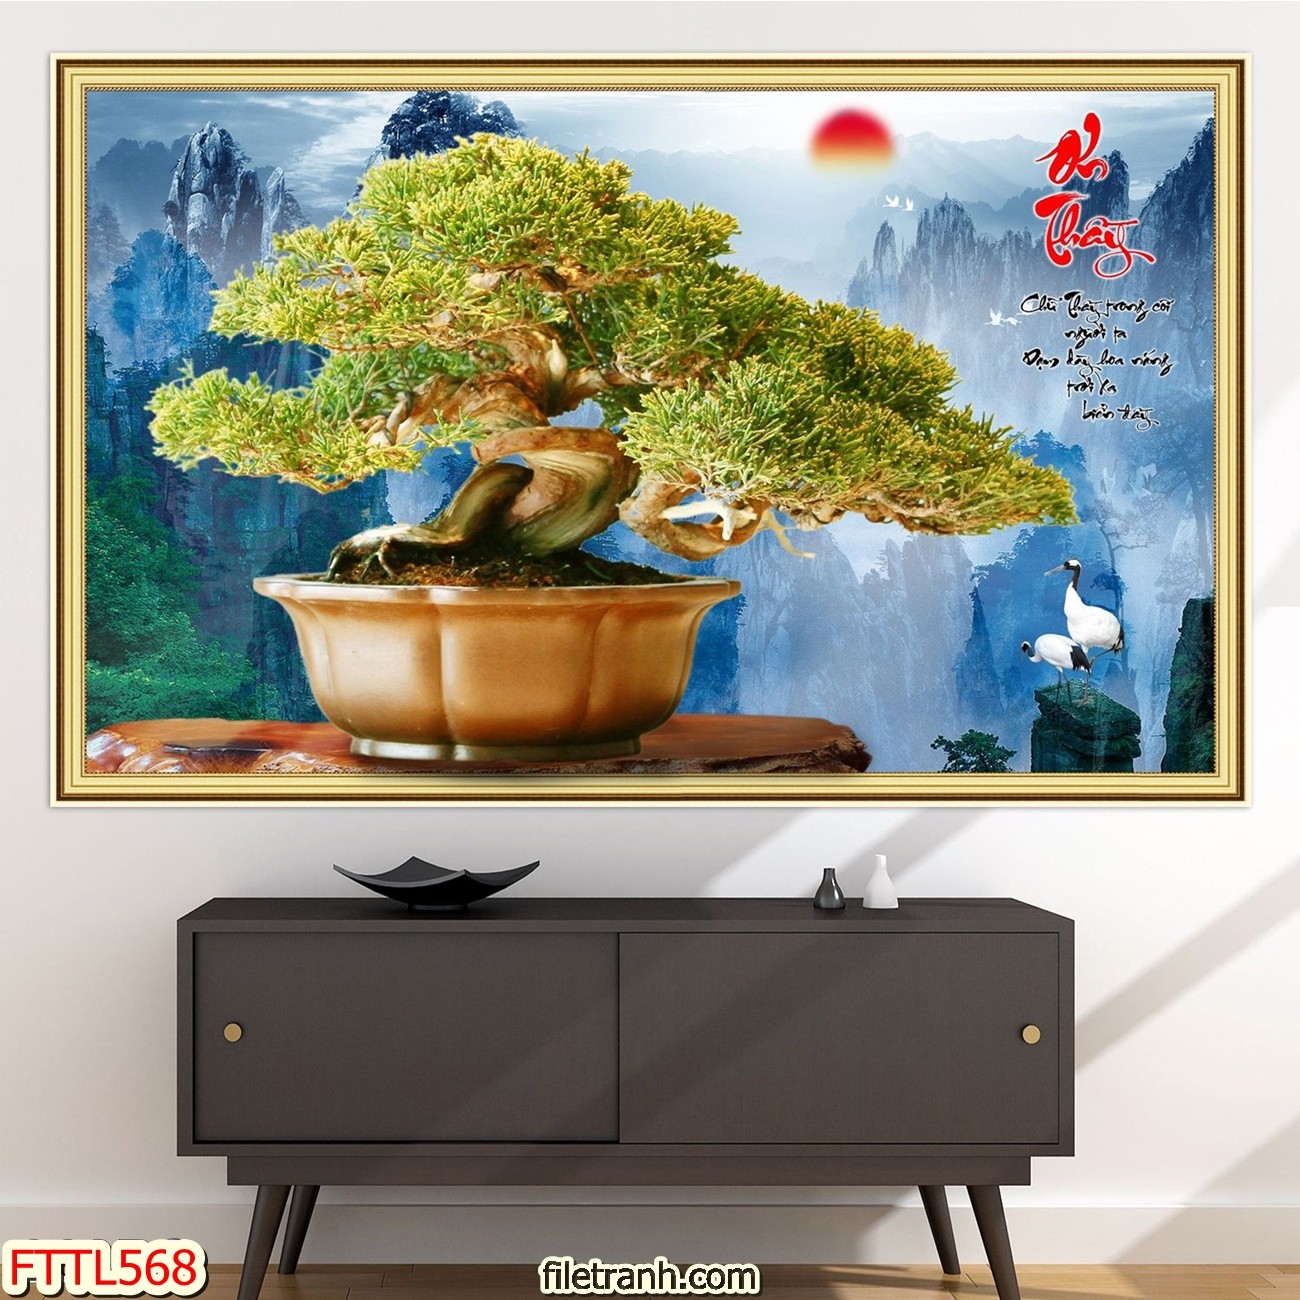 https://filetranh.com/file-tranh-chau-mai-bonsai/file-tranh-chau-mai-bonsai-fttl568.html